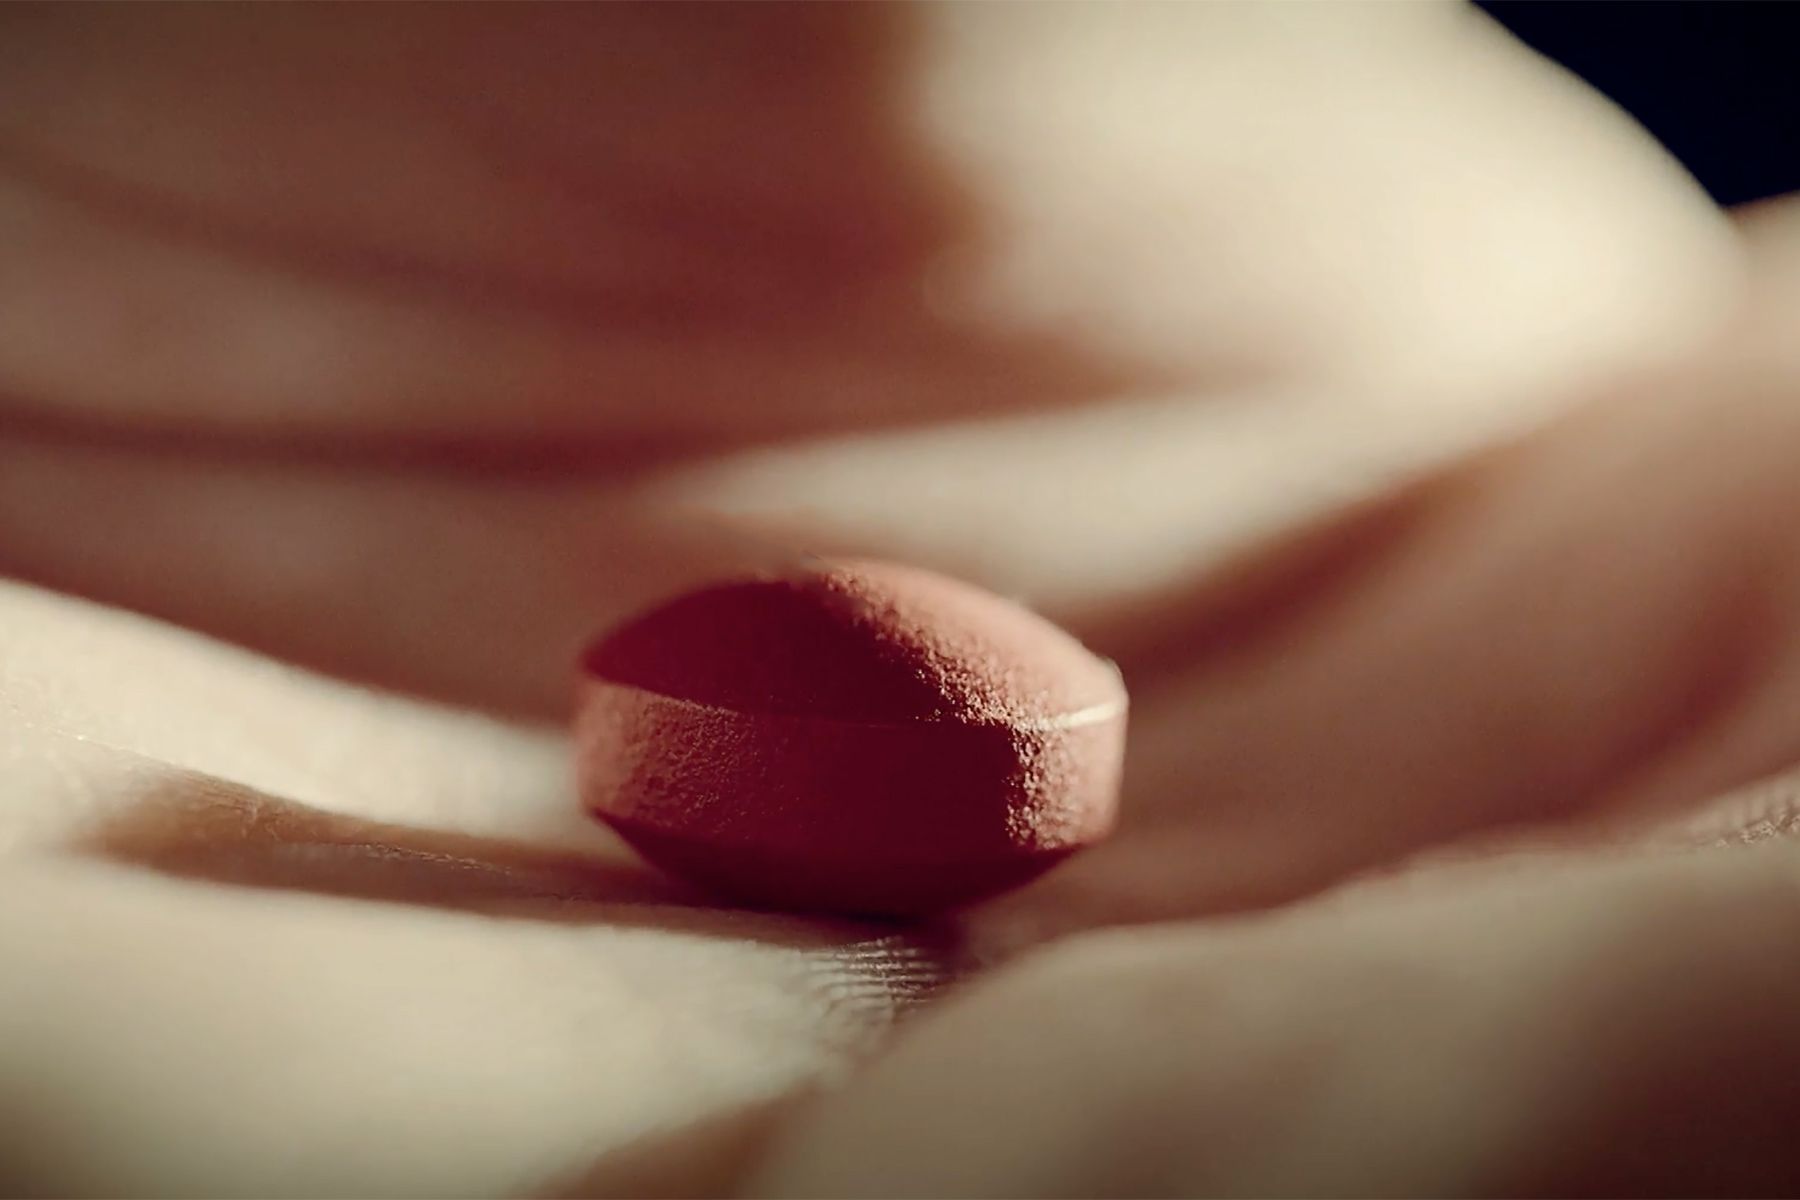 photo of pill